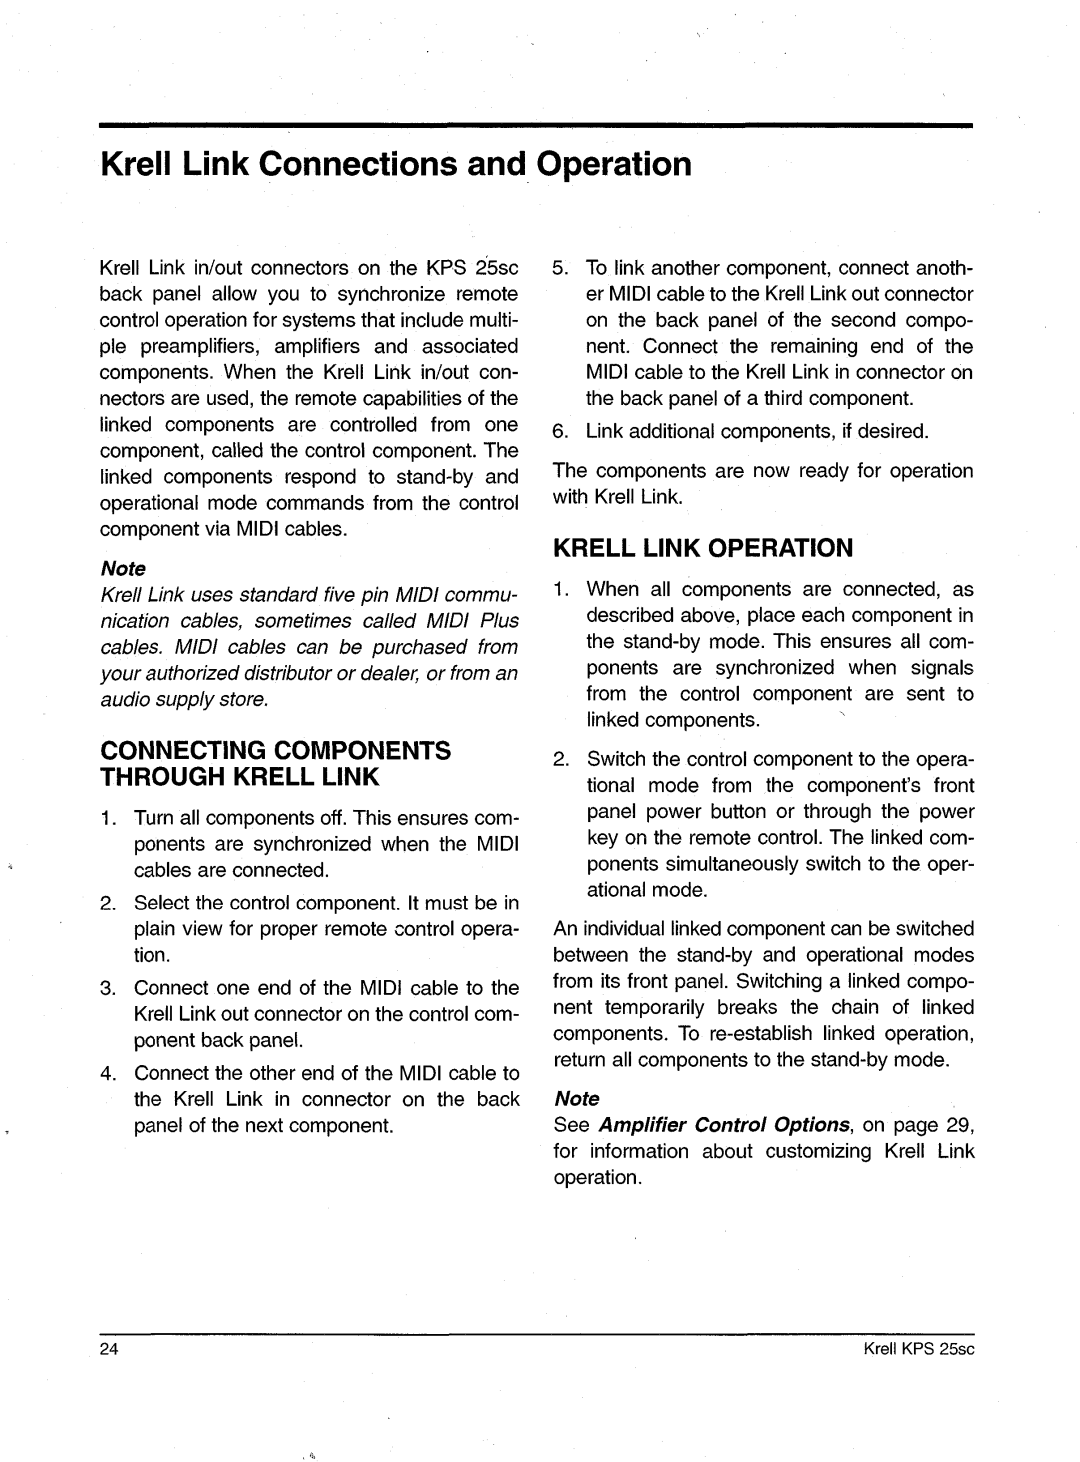 Krell Industries KPS 25sc manual Krell Link ConnectionsandOperation, Krell Link Operation 